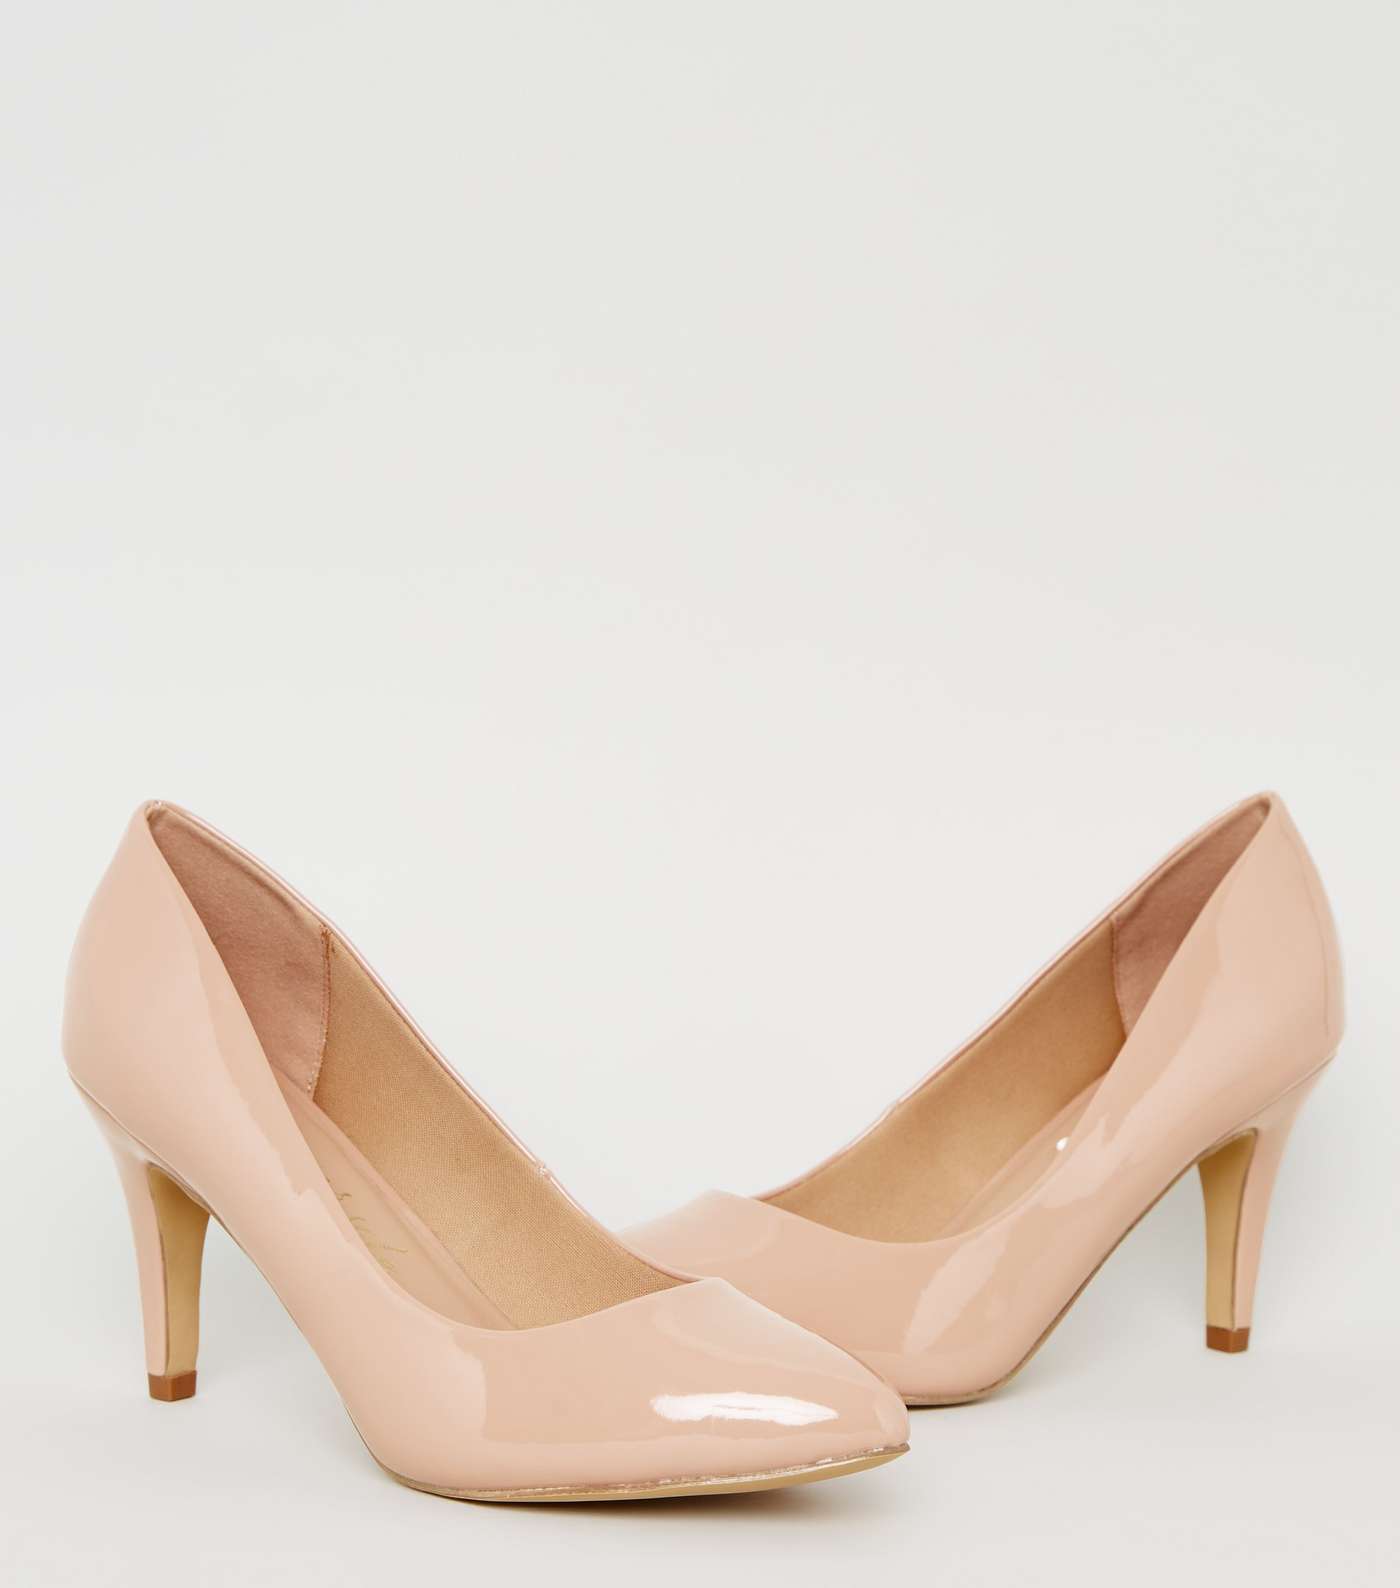 Wide Fit Pale Pink Patent Stiletto Court Shoes Image 3